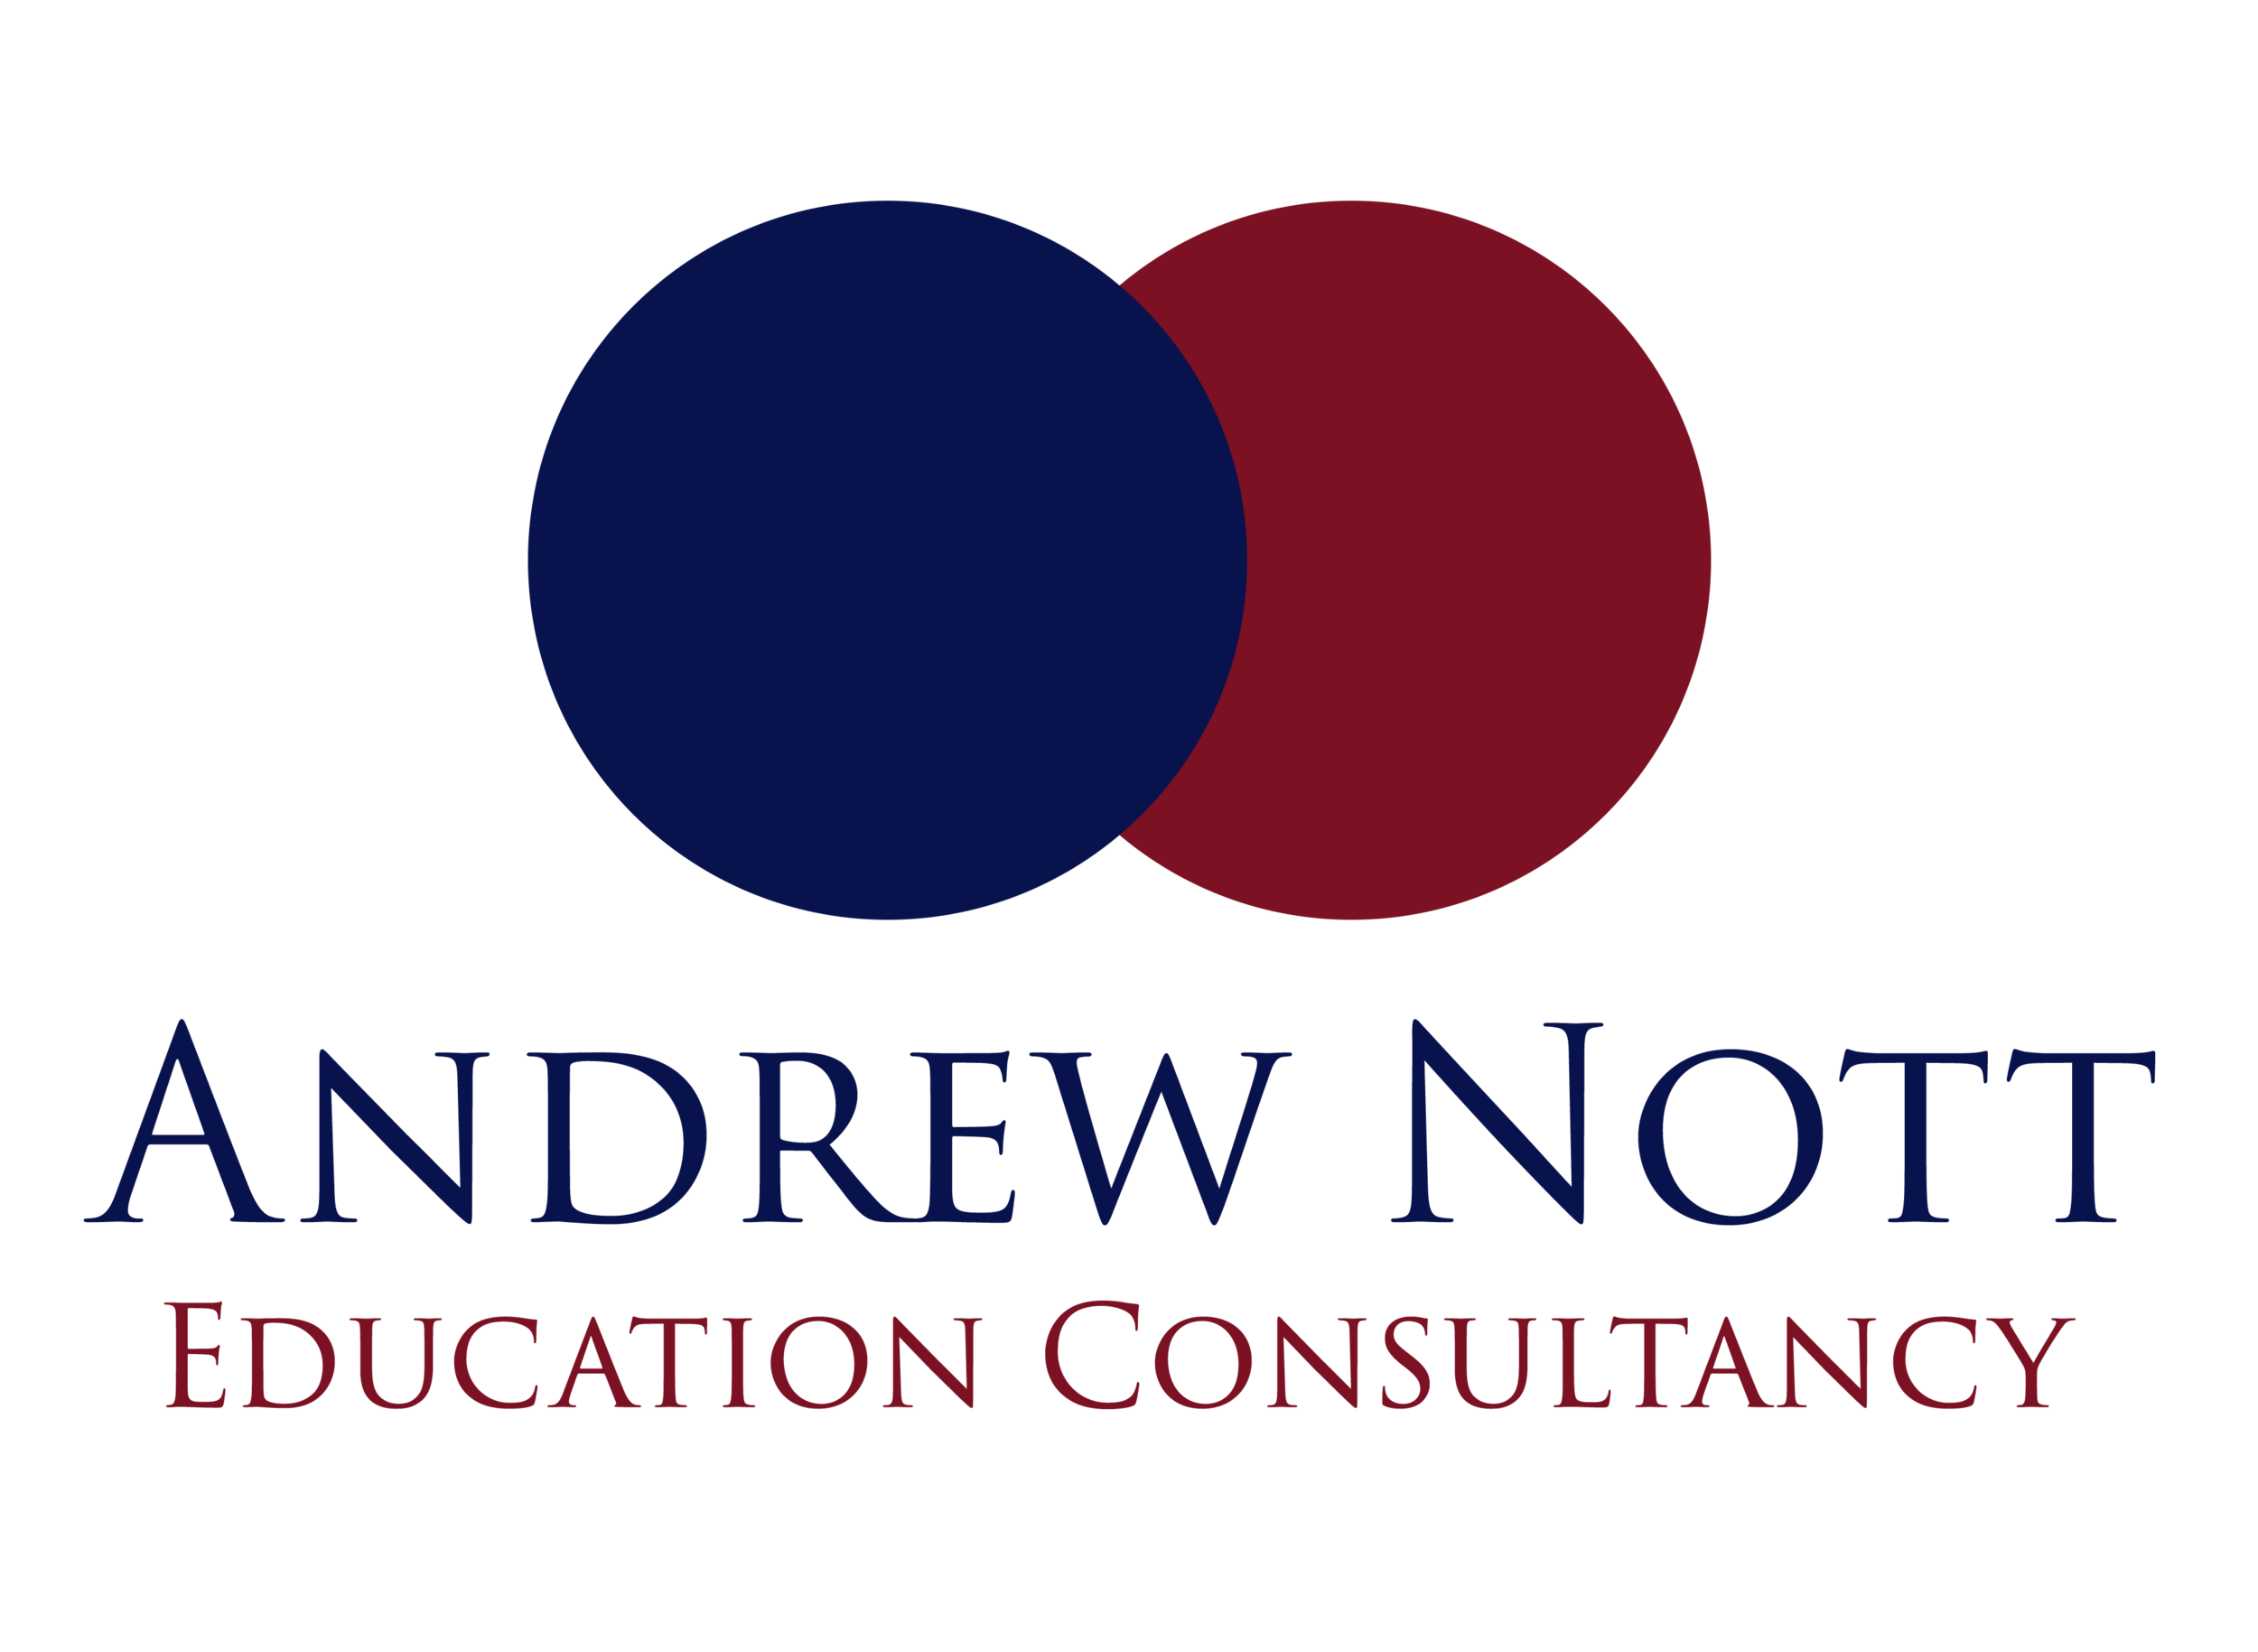 Andrew Nott Education Consultancy